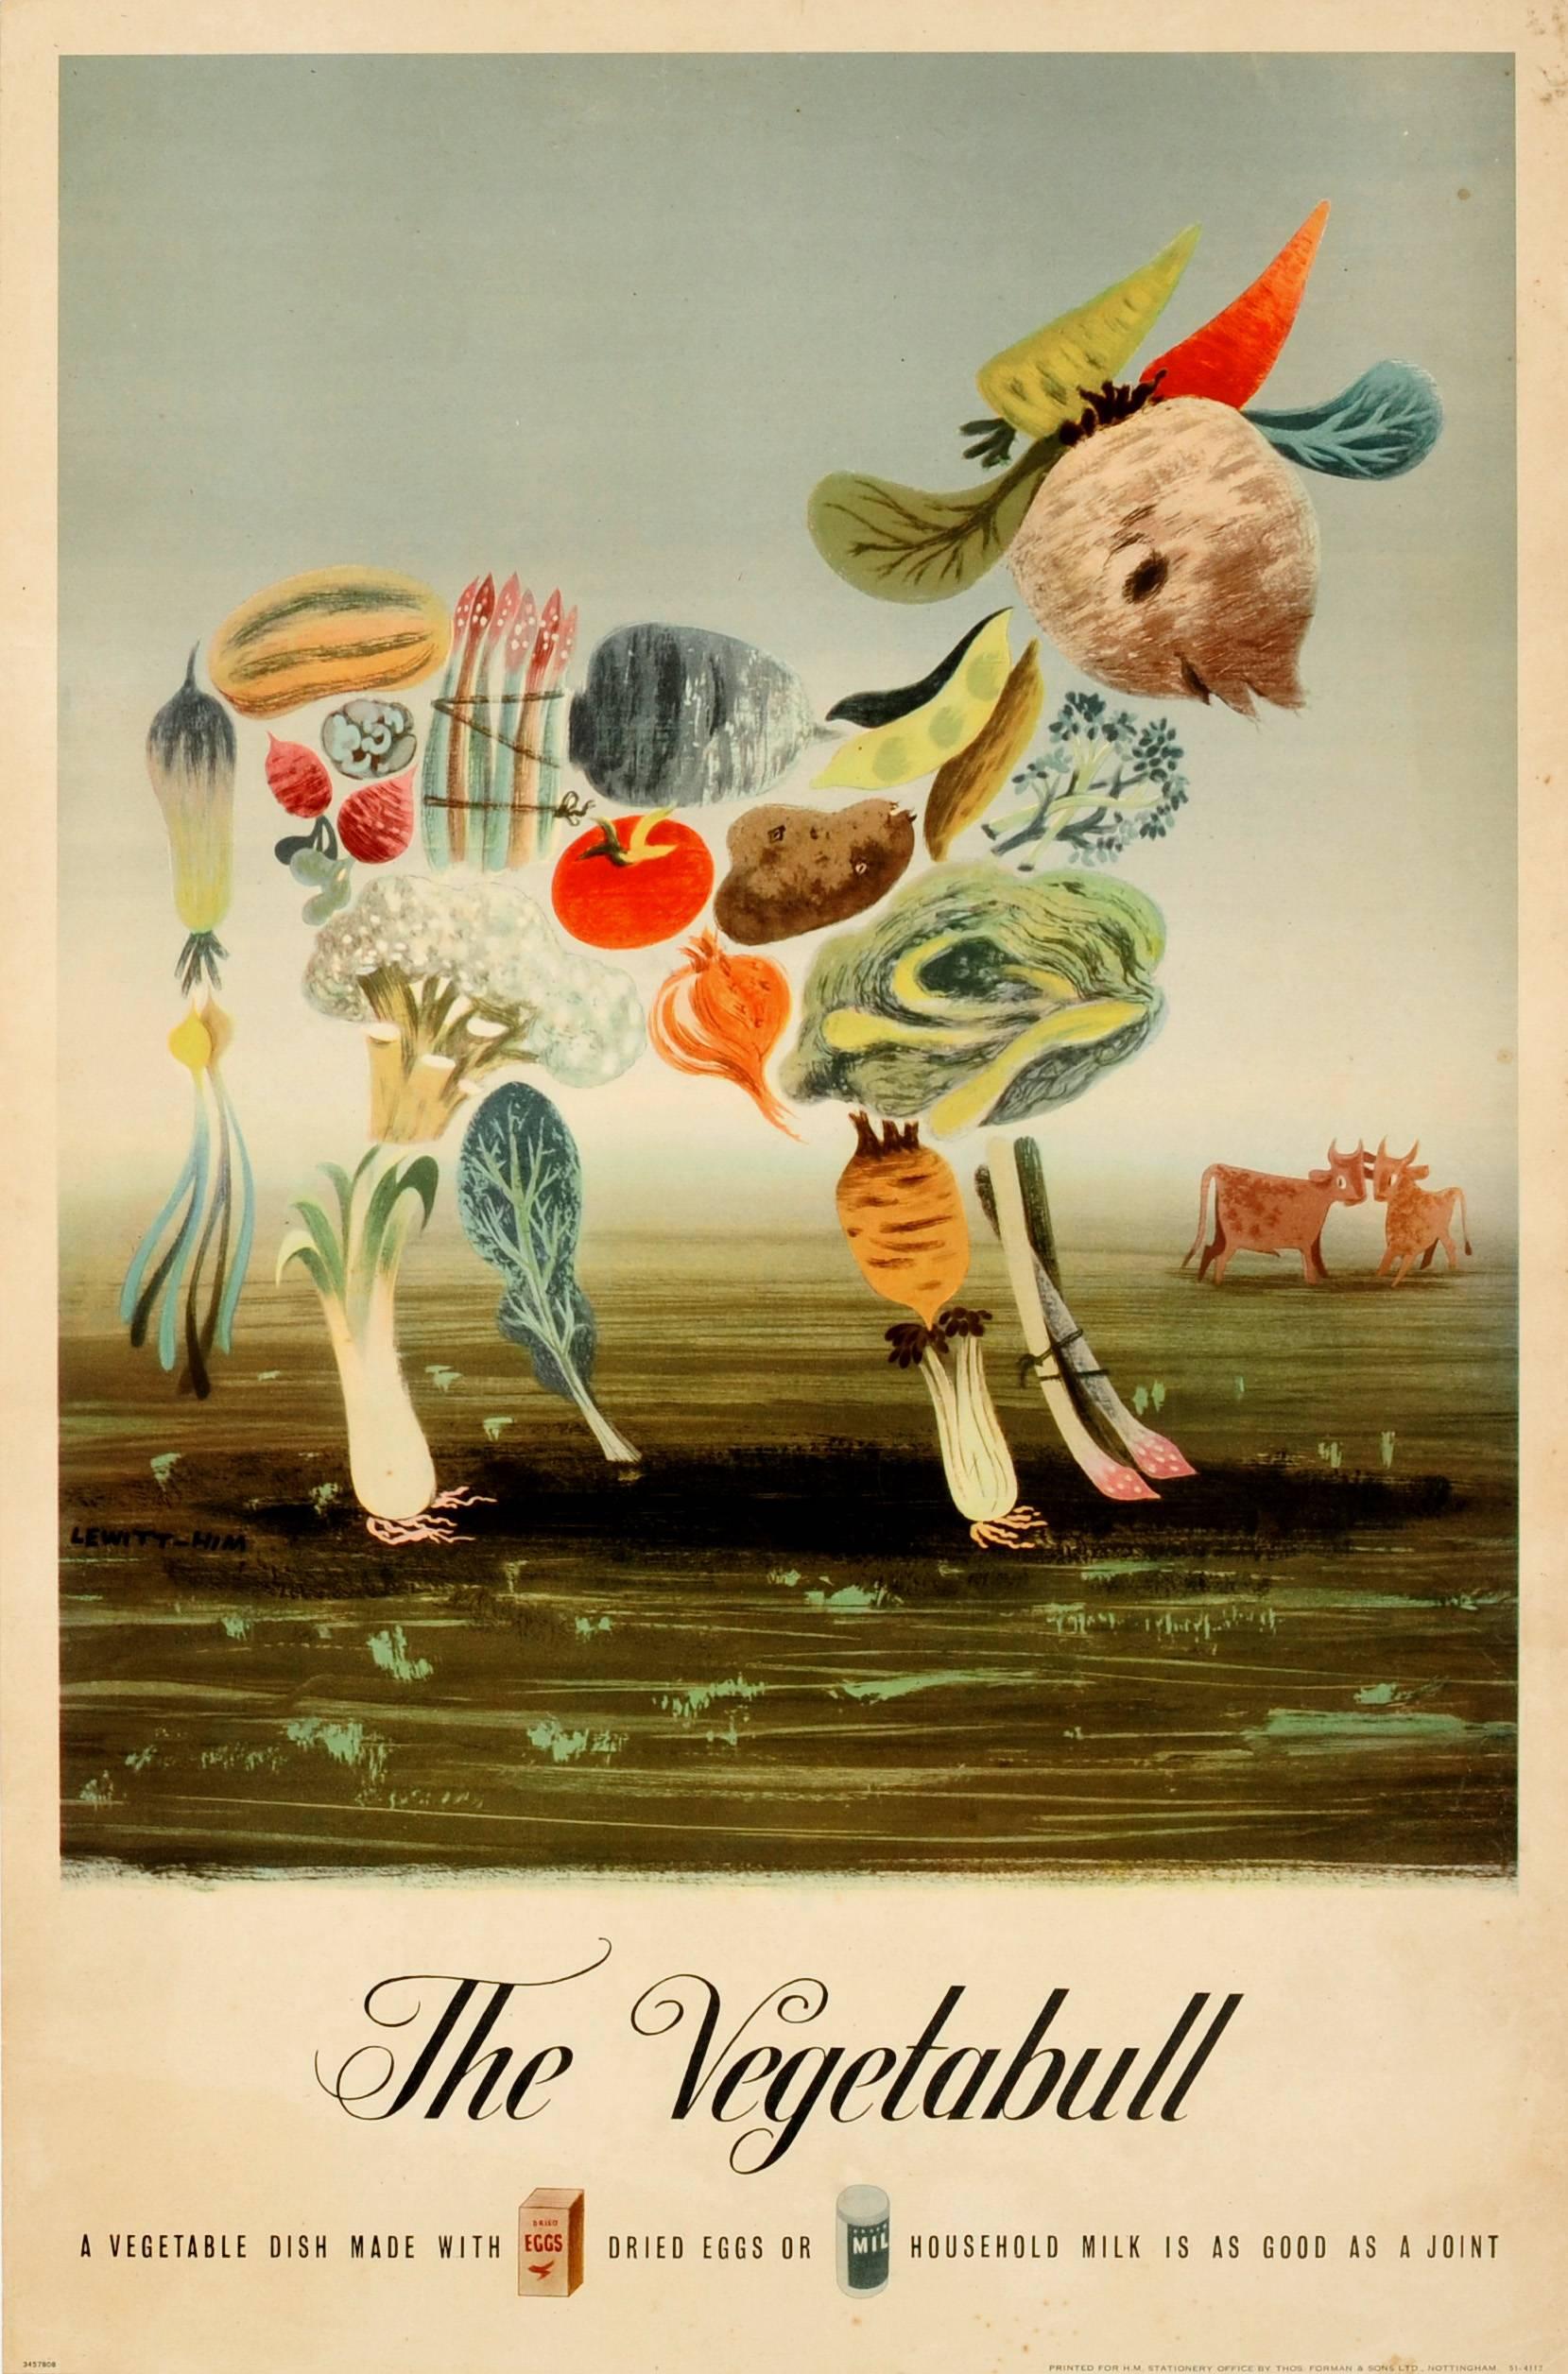 Jan Le Witt and George Him Print - Original Vintage WWII Food Propaganda Poster By Lewitt-Him - The Vegetabull